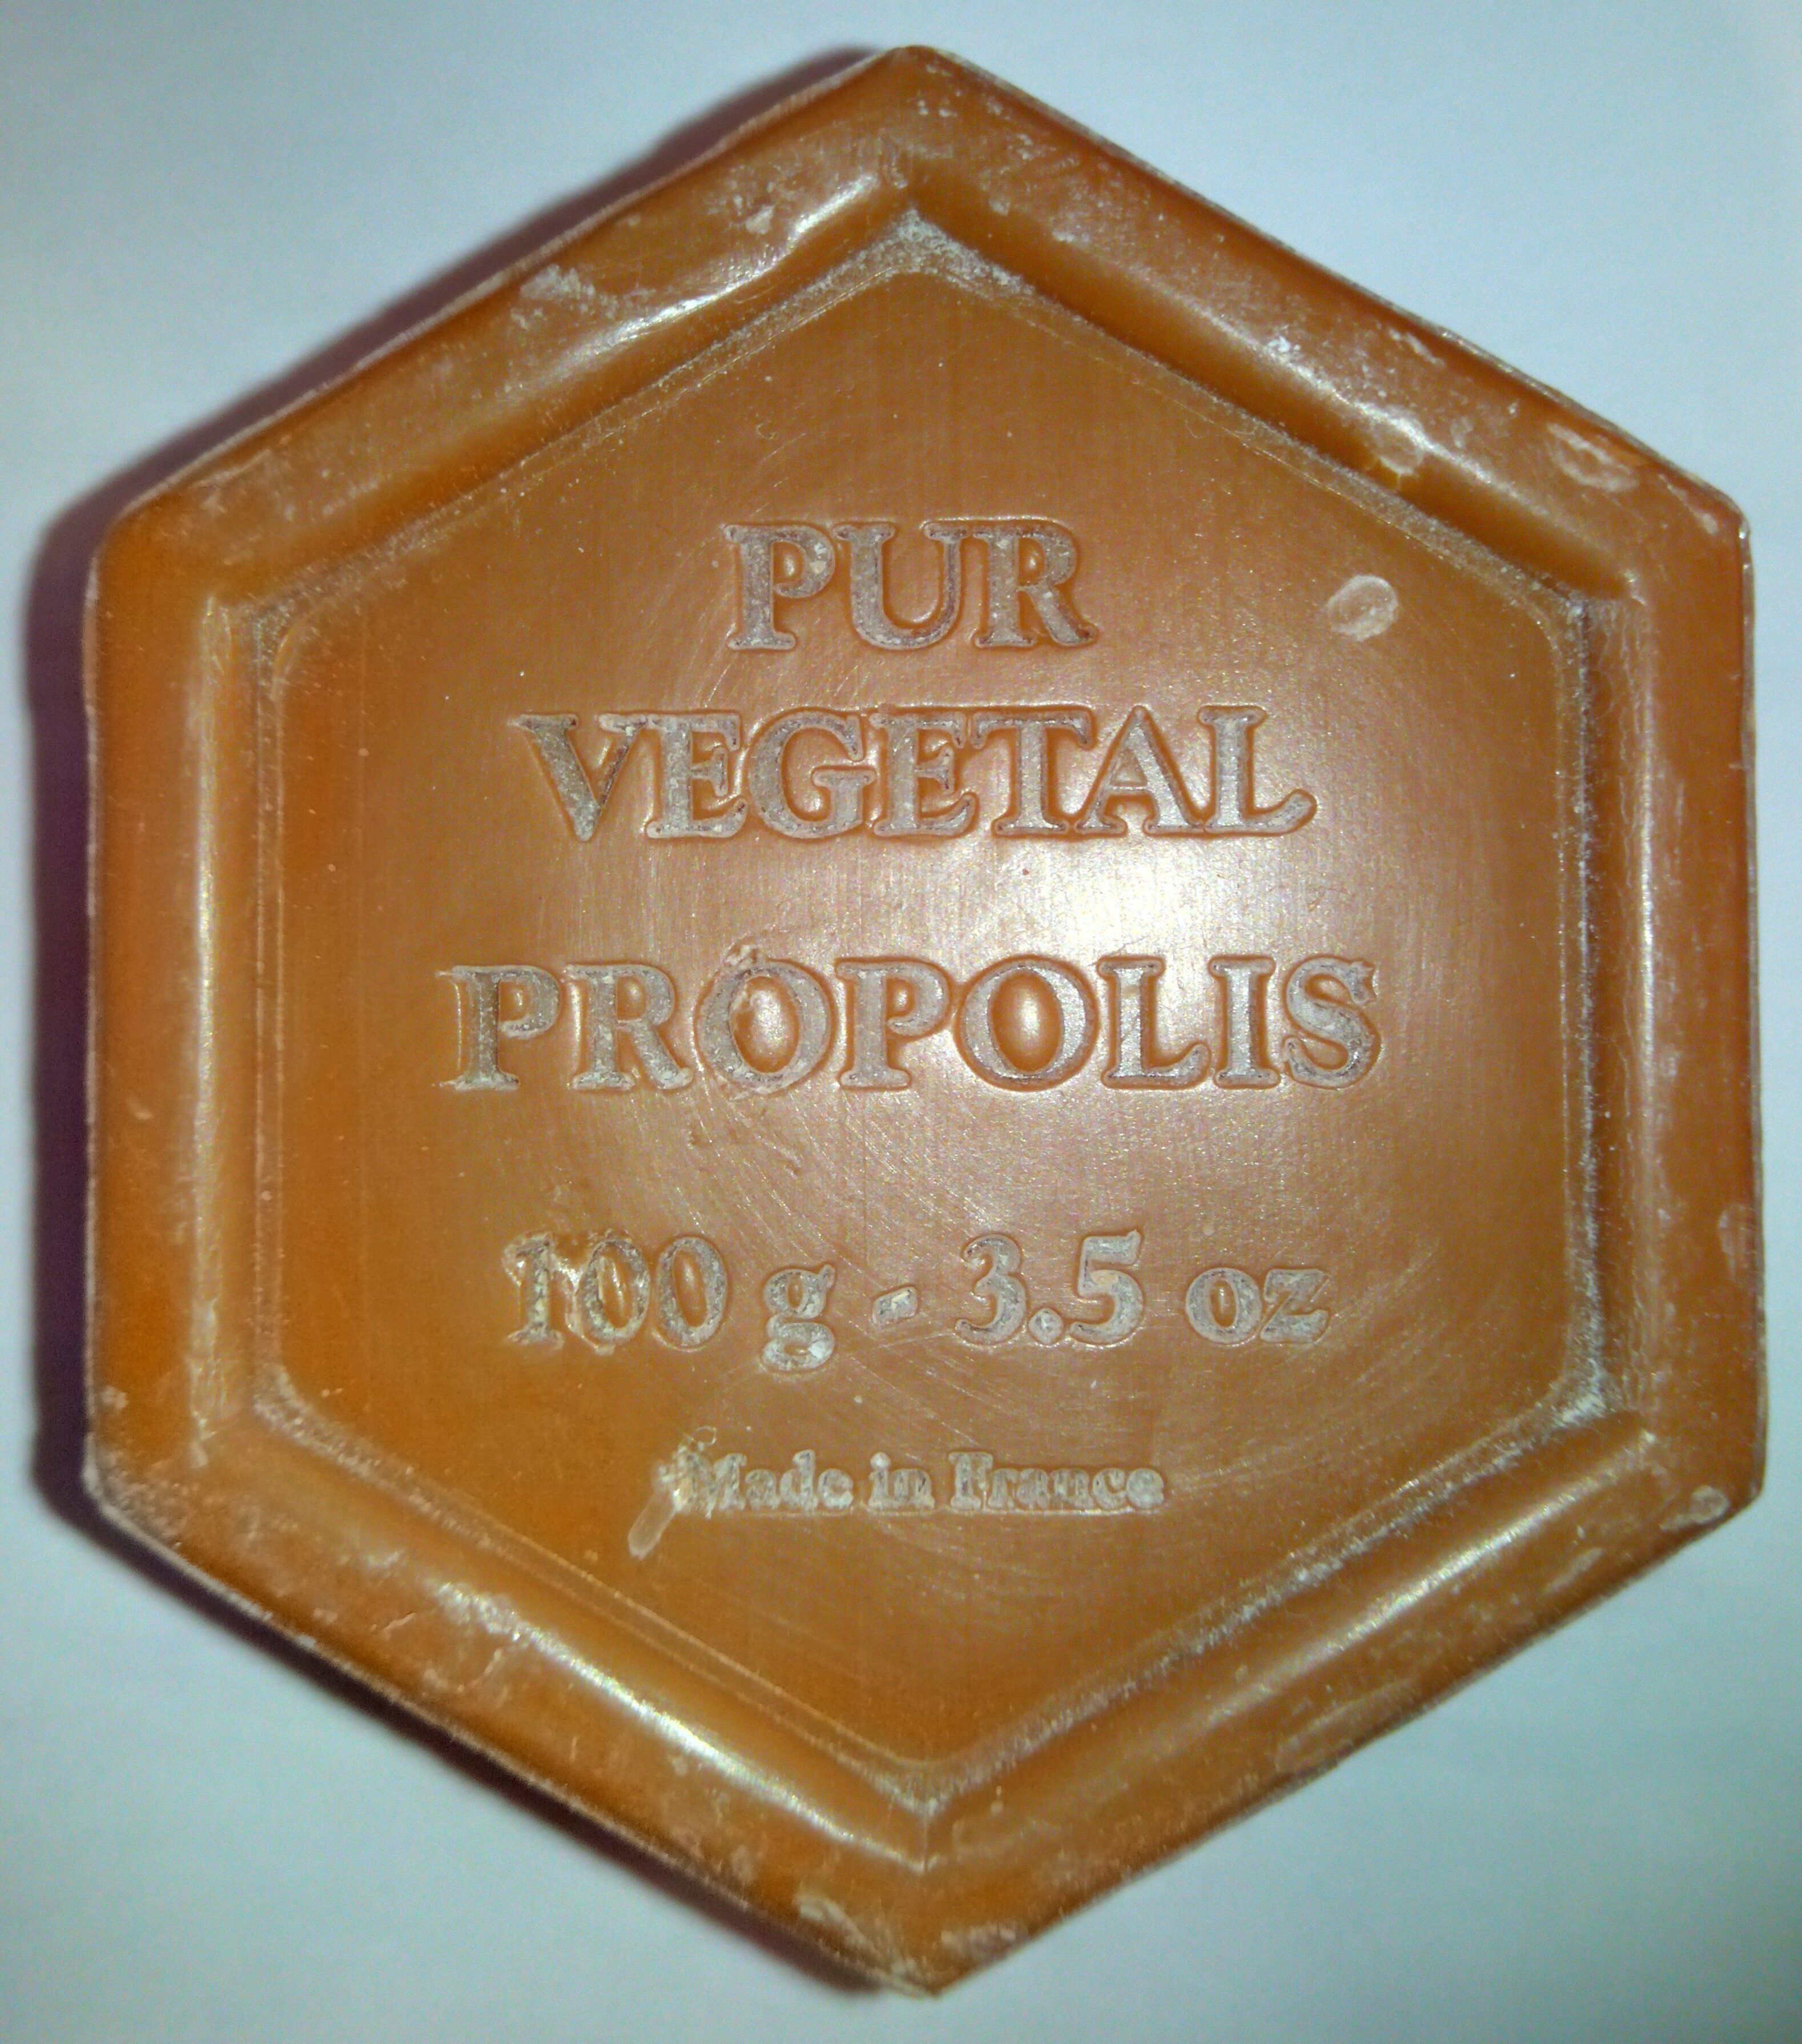 Savon à la Propolis 100g - Produit - fr